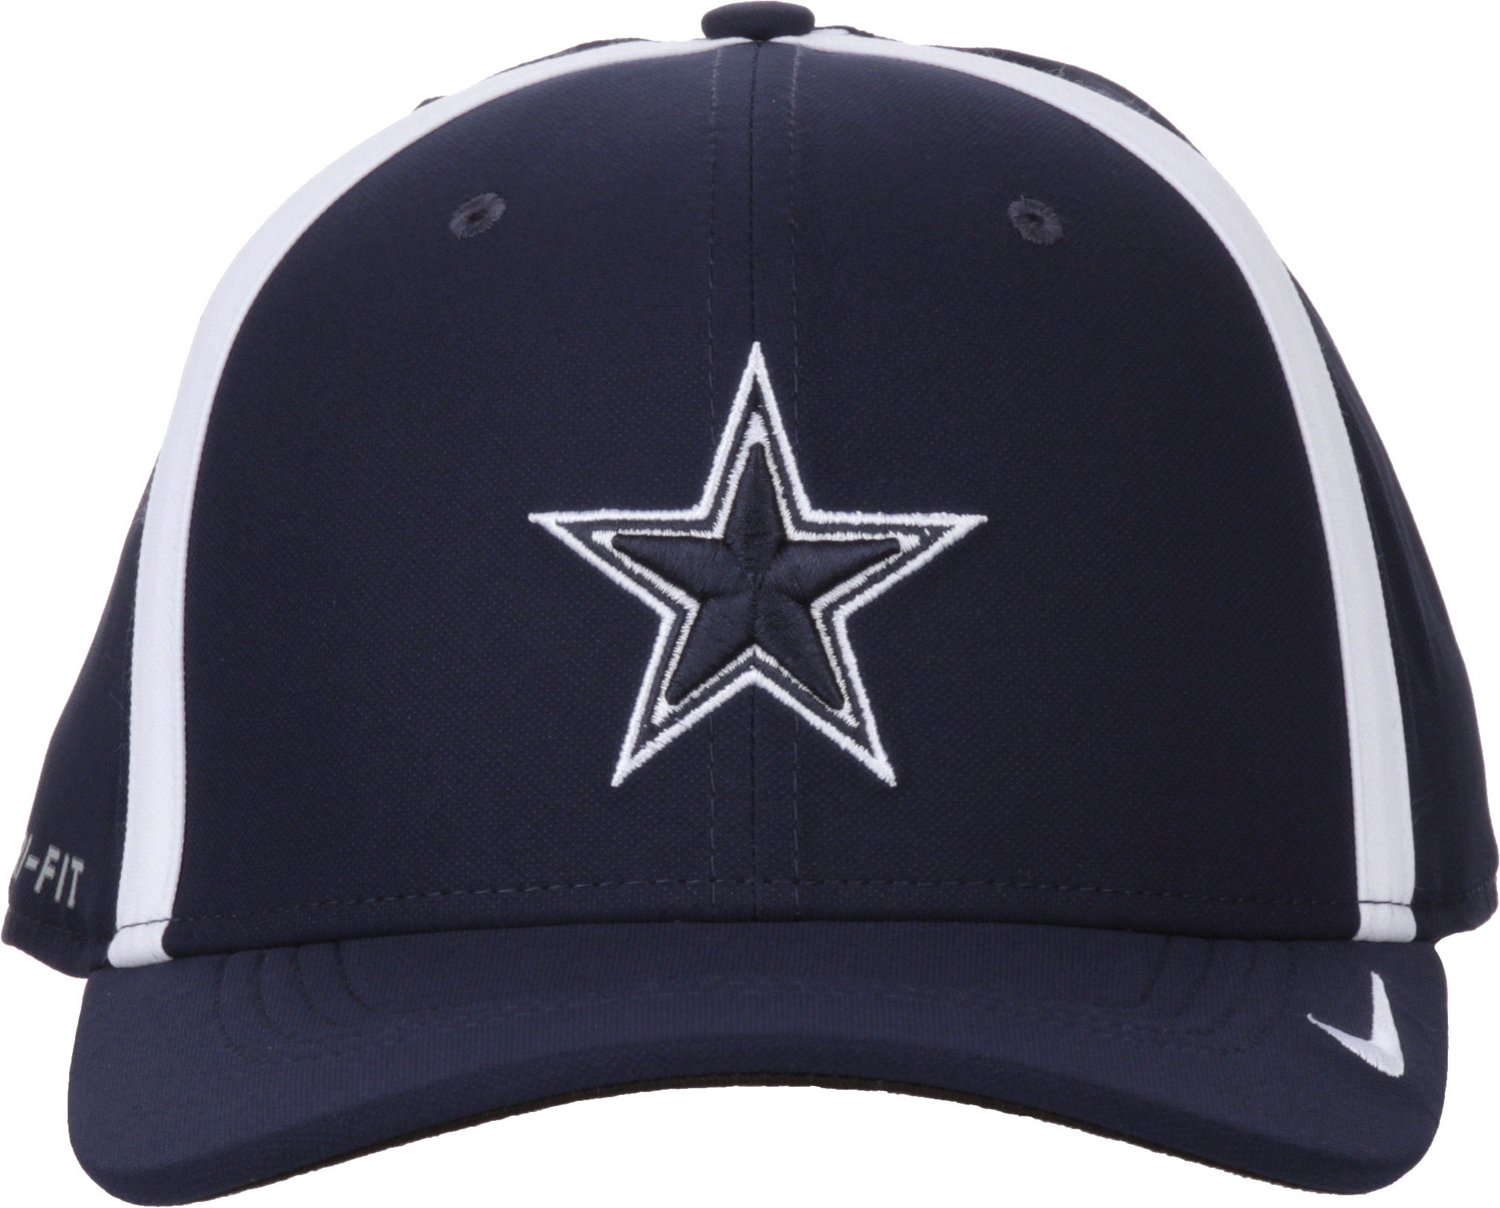 Dallas Cowboys Headwear | Academy